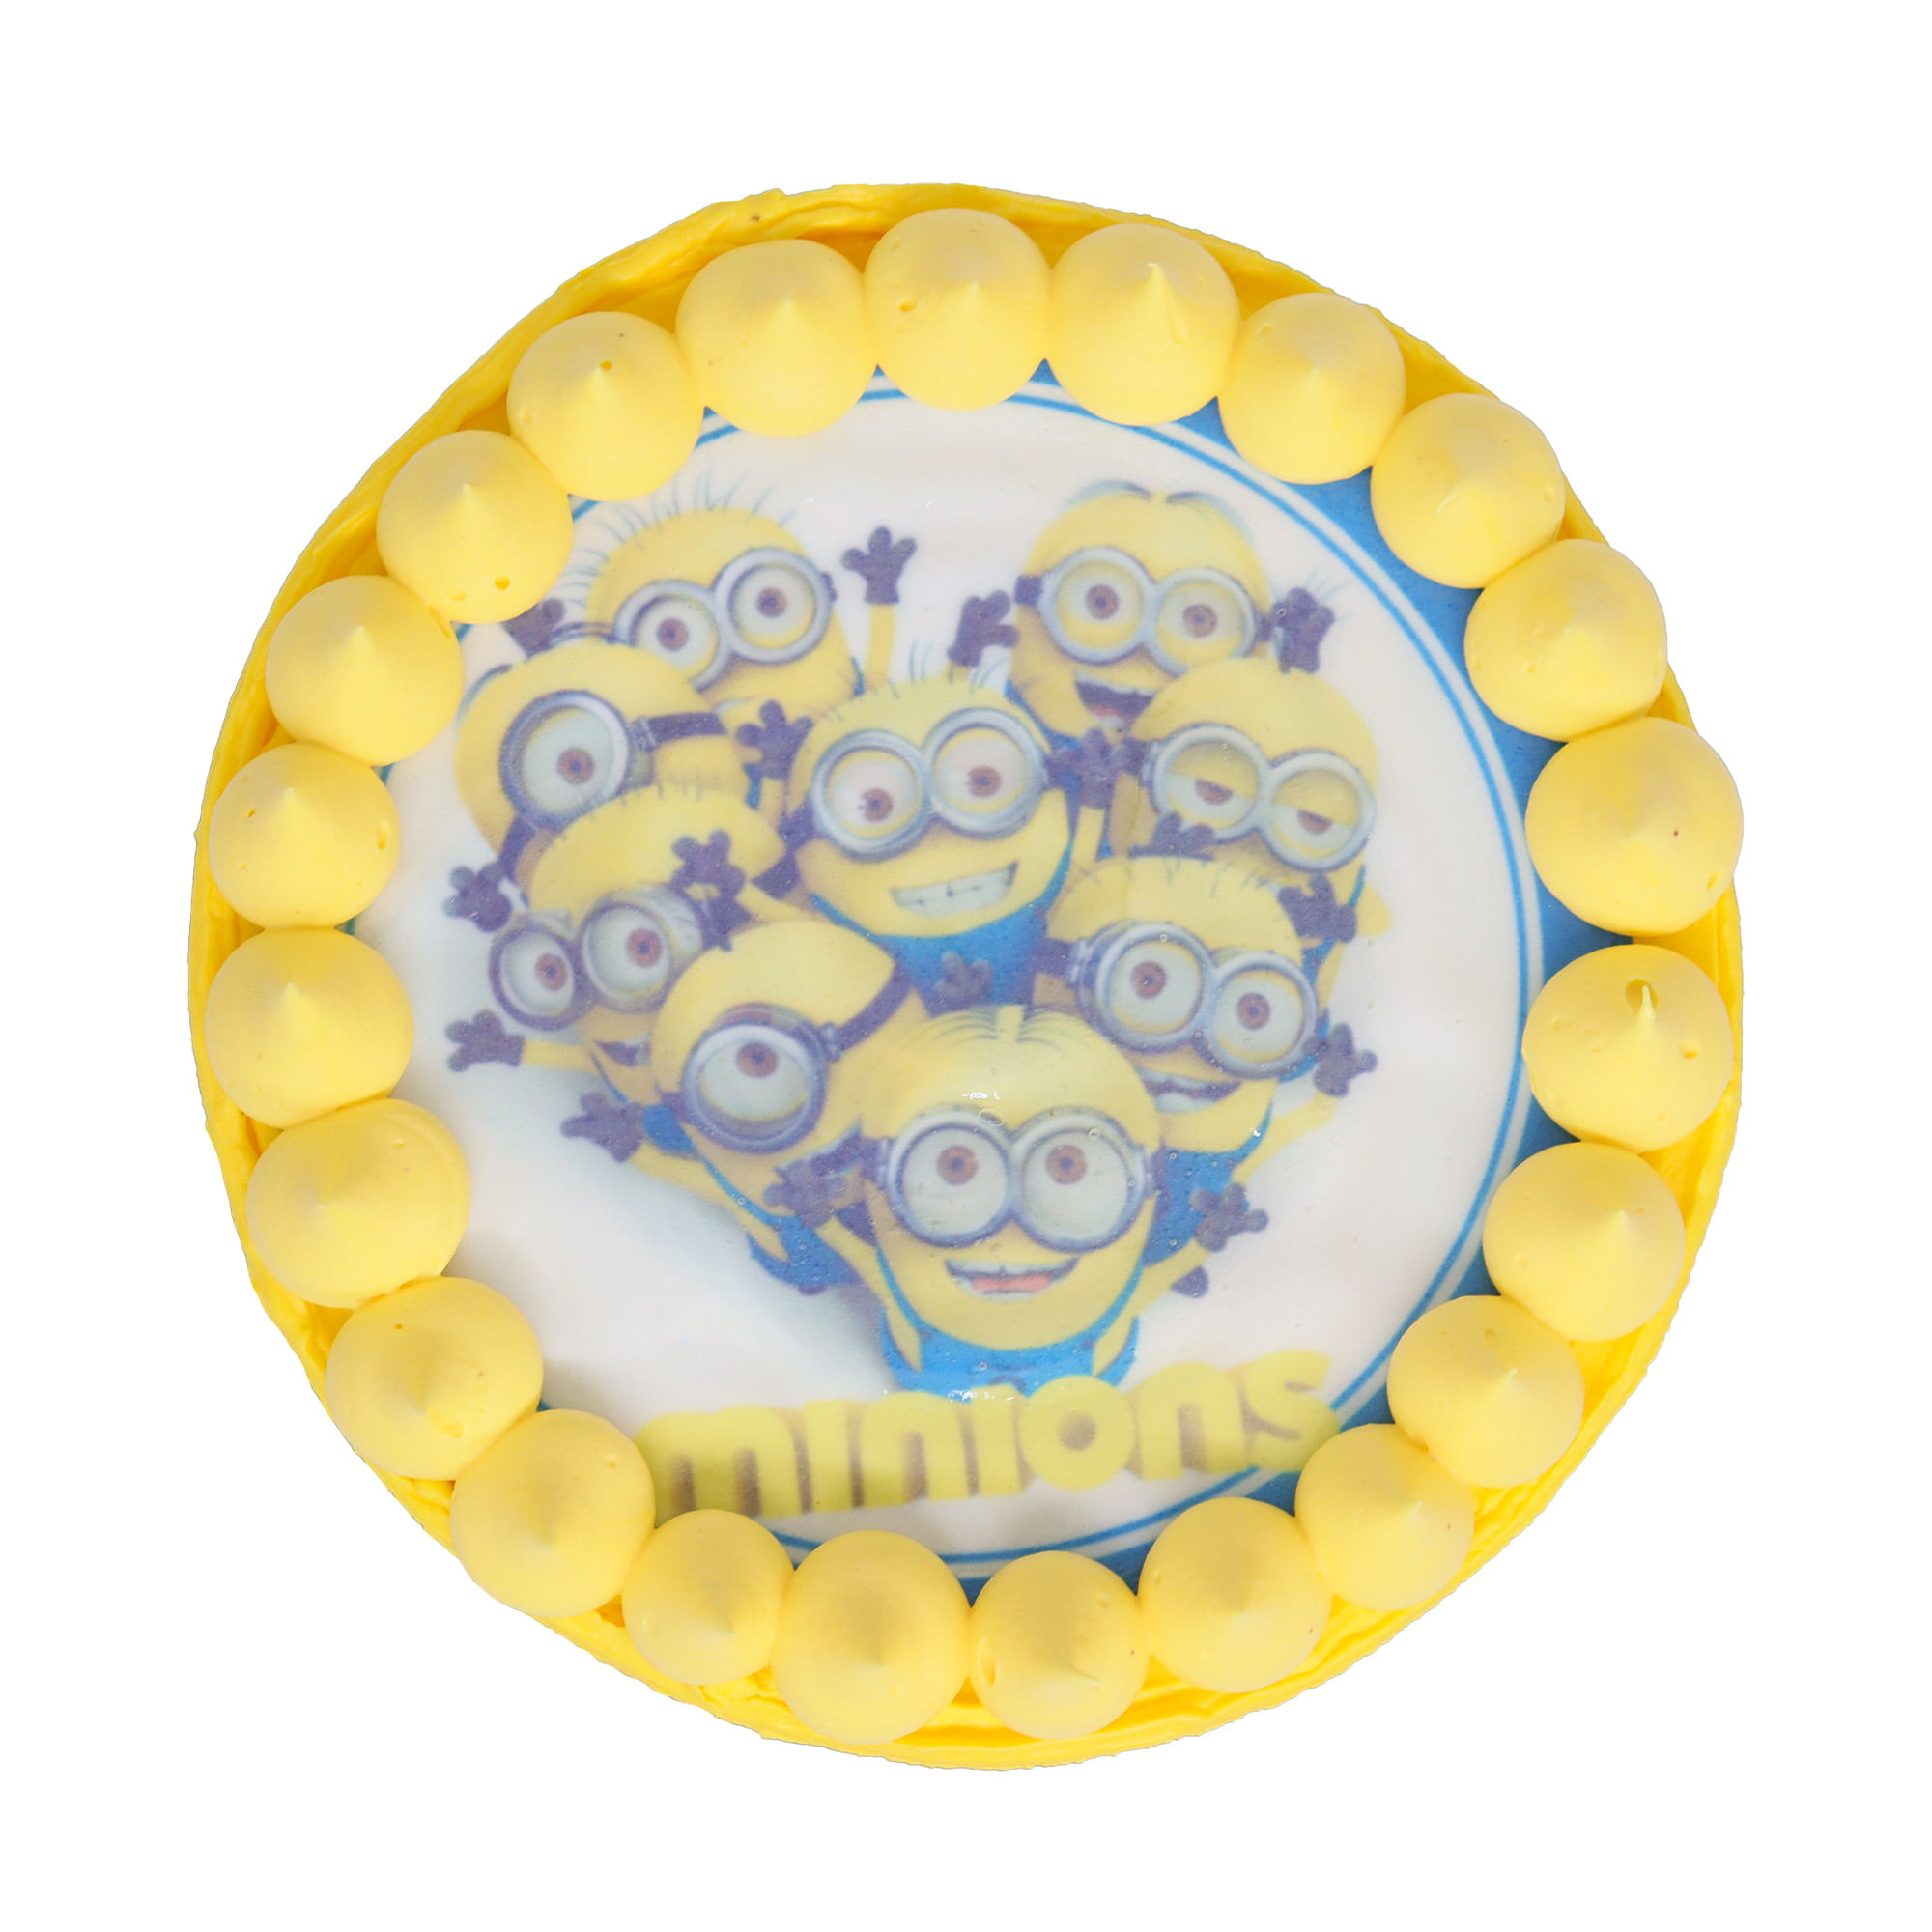 The Sweet Spot – Birthday Cakes